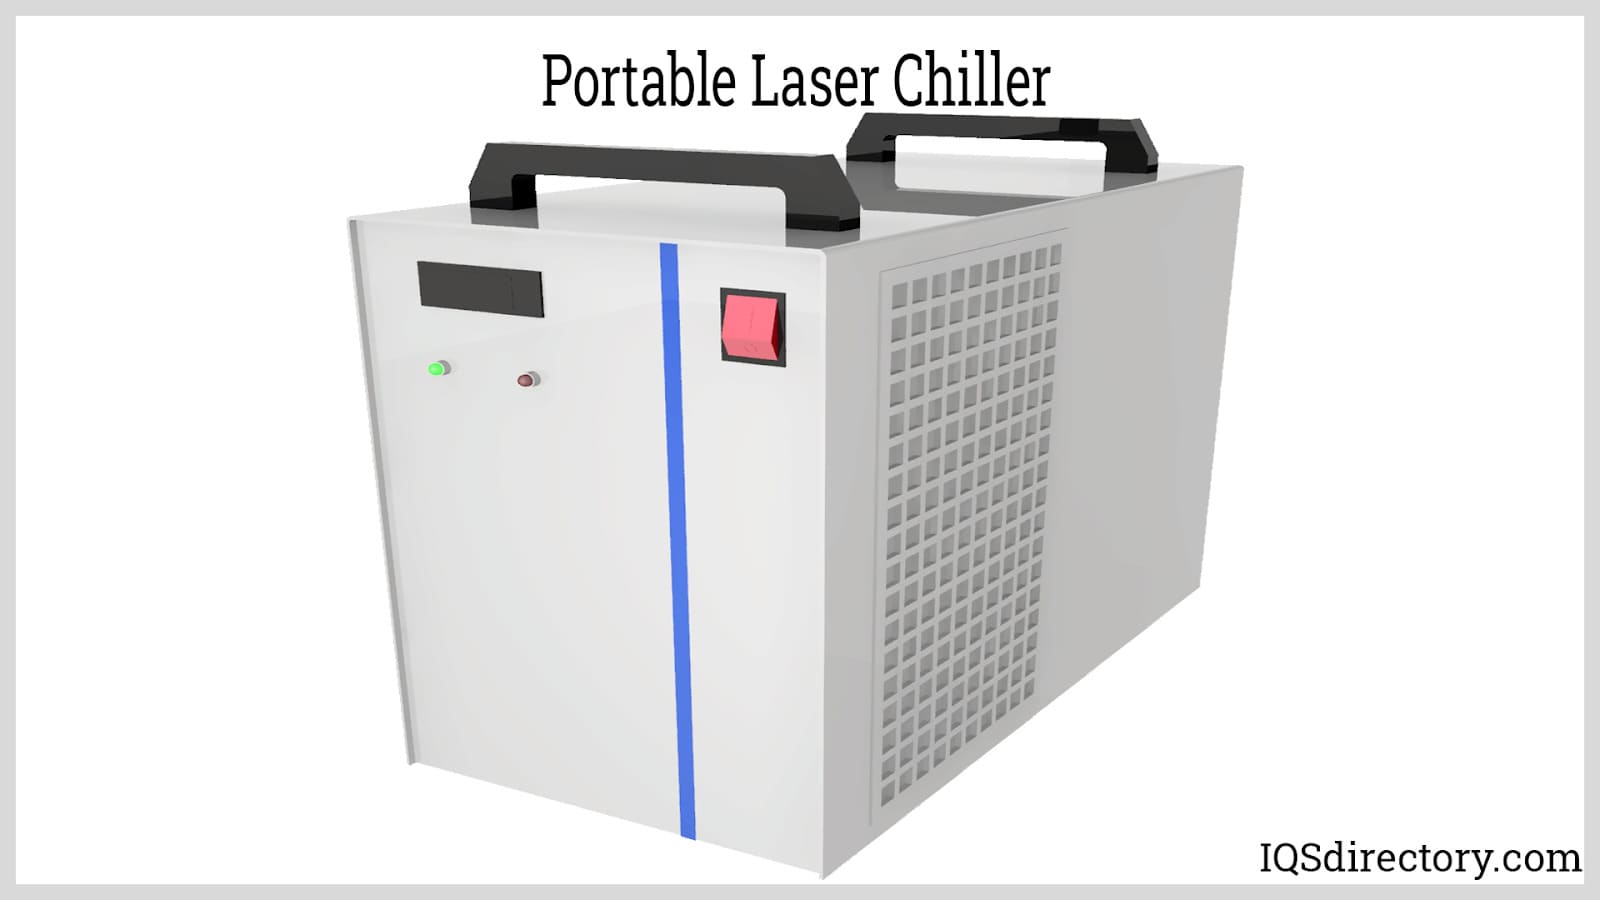 Portable Laser Chiller